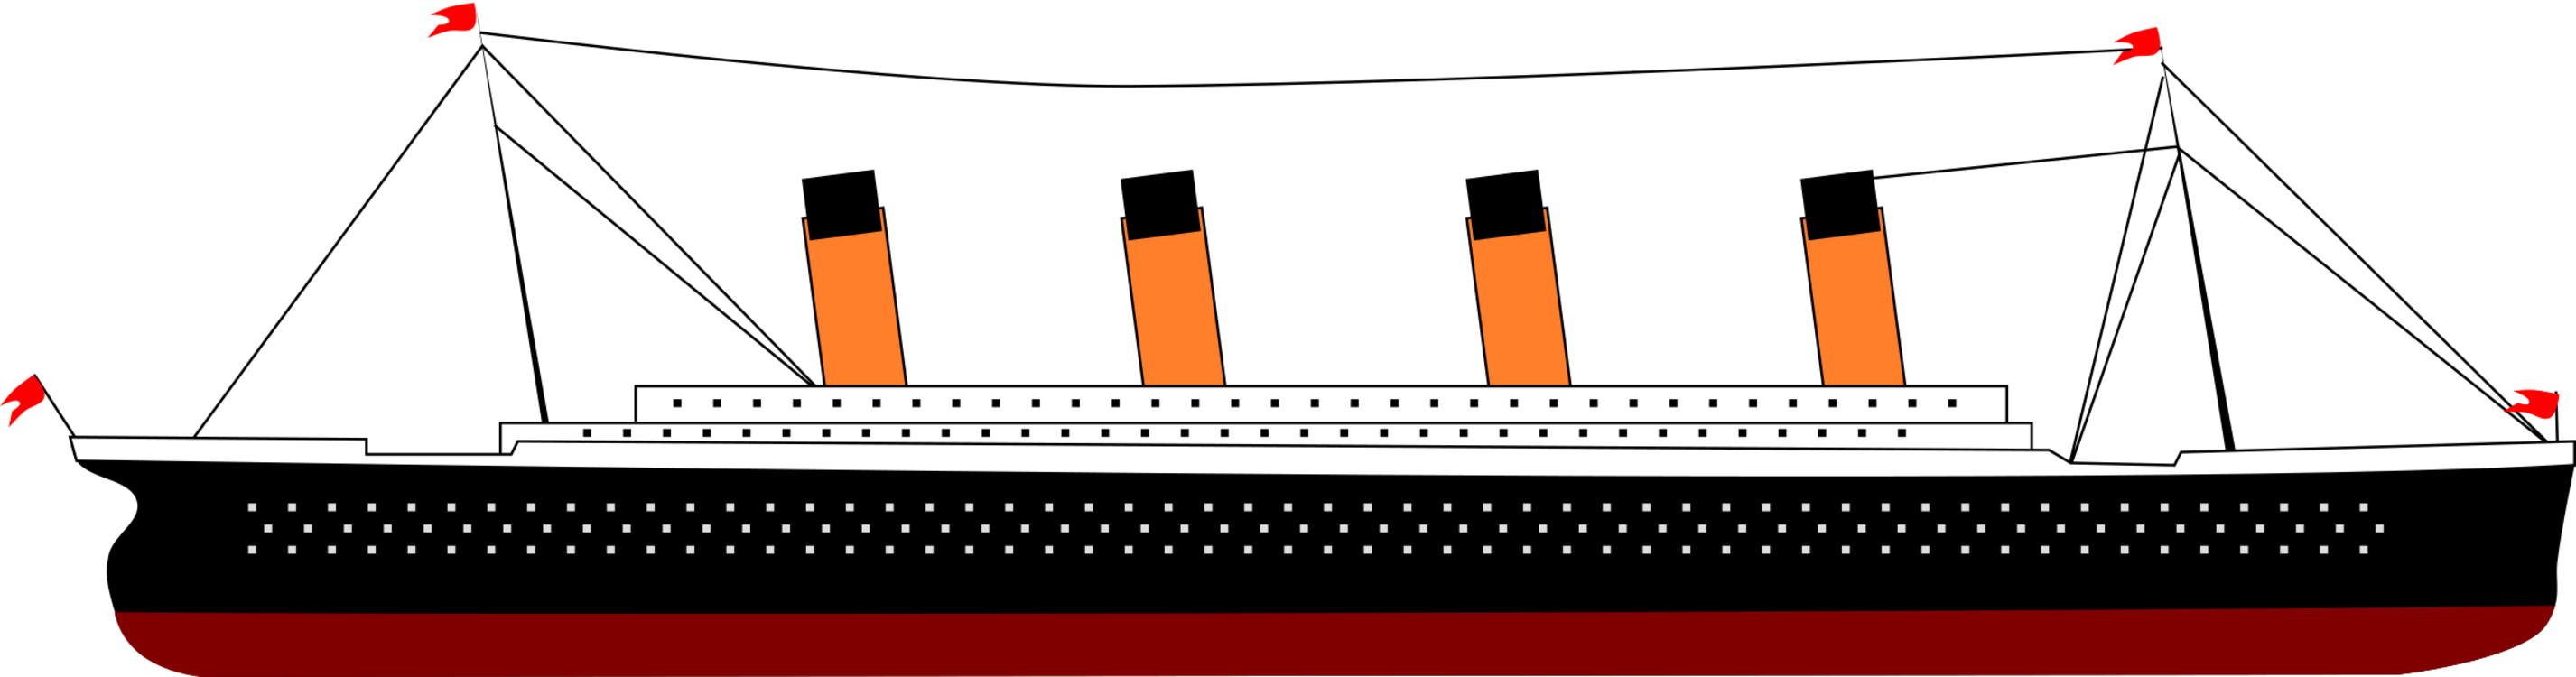 Titanic Cartoon Drawing